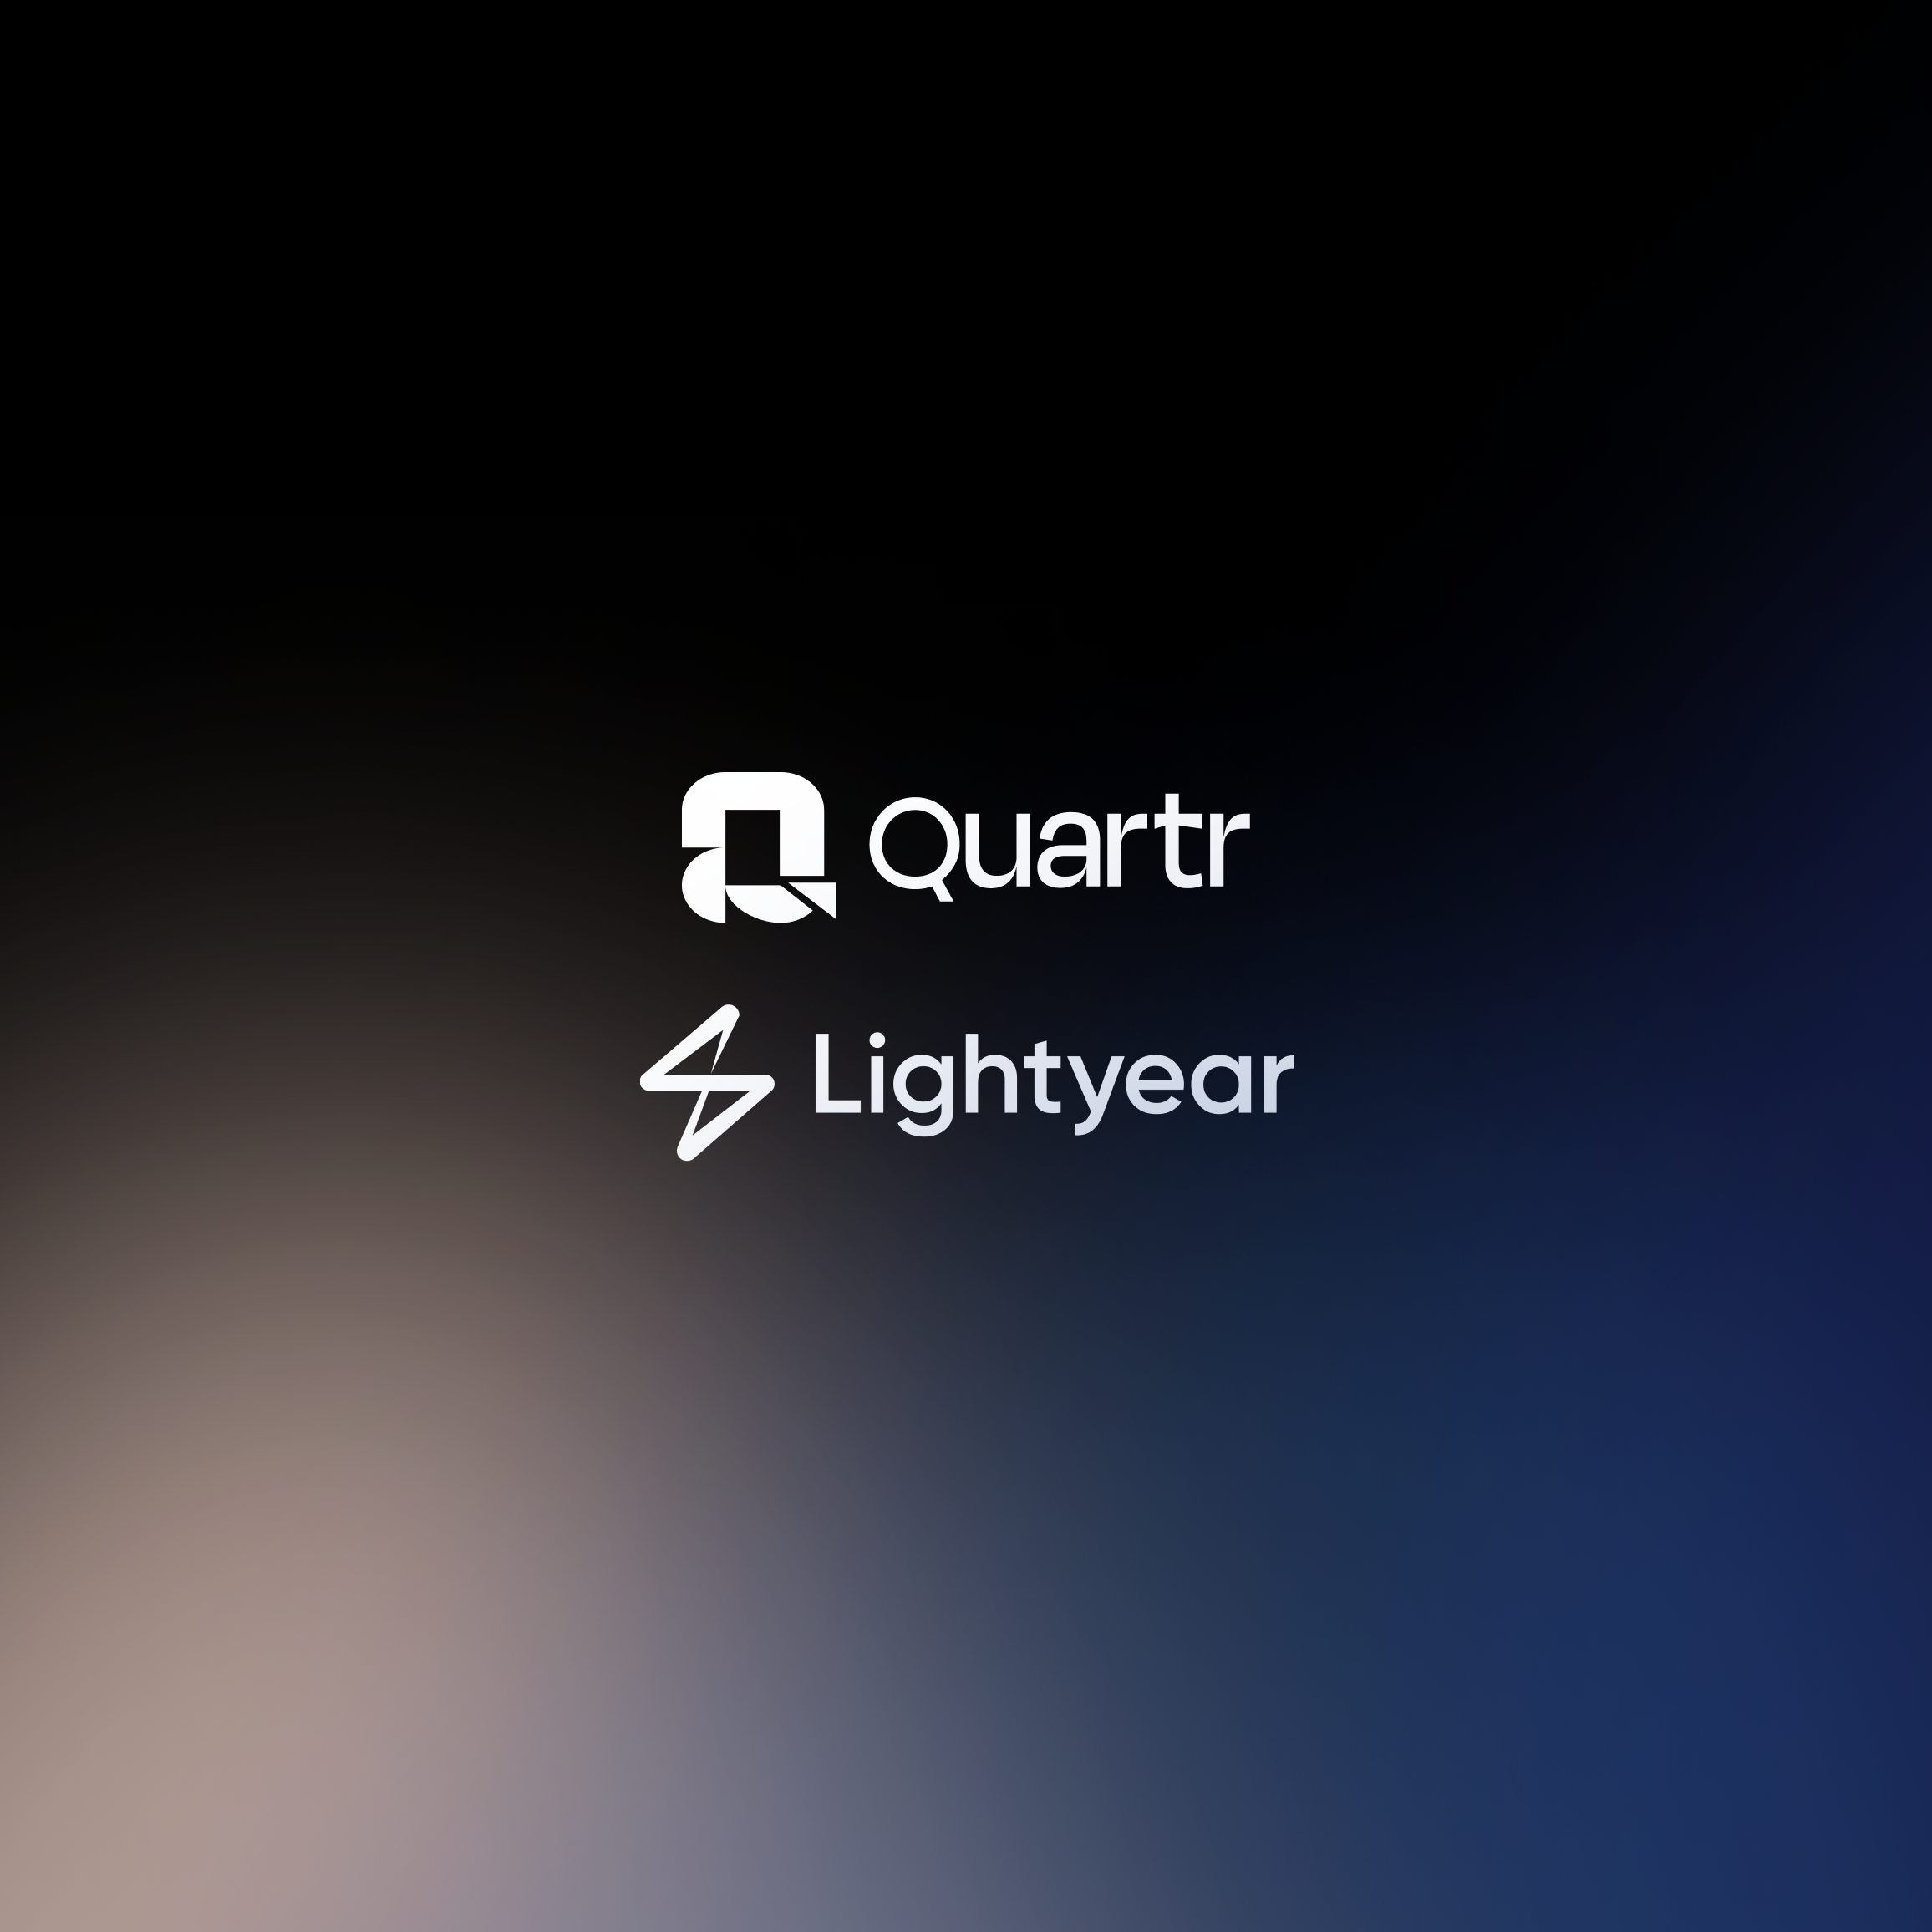 Quartr and GoLightyears logos